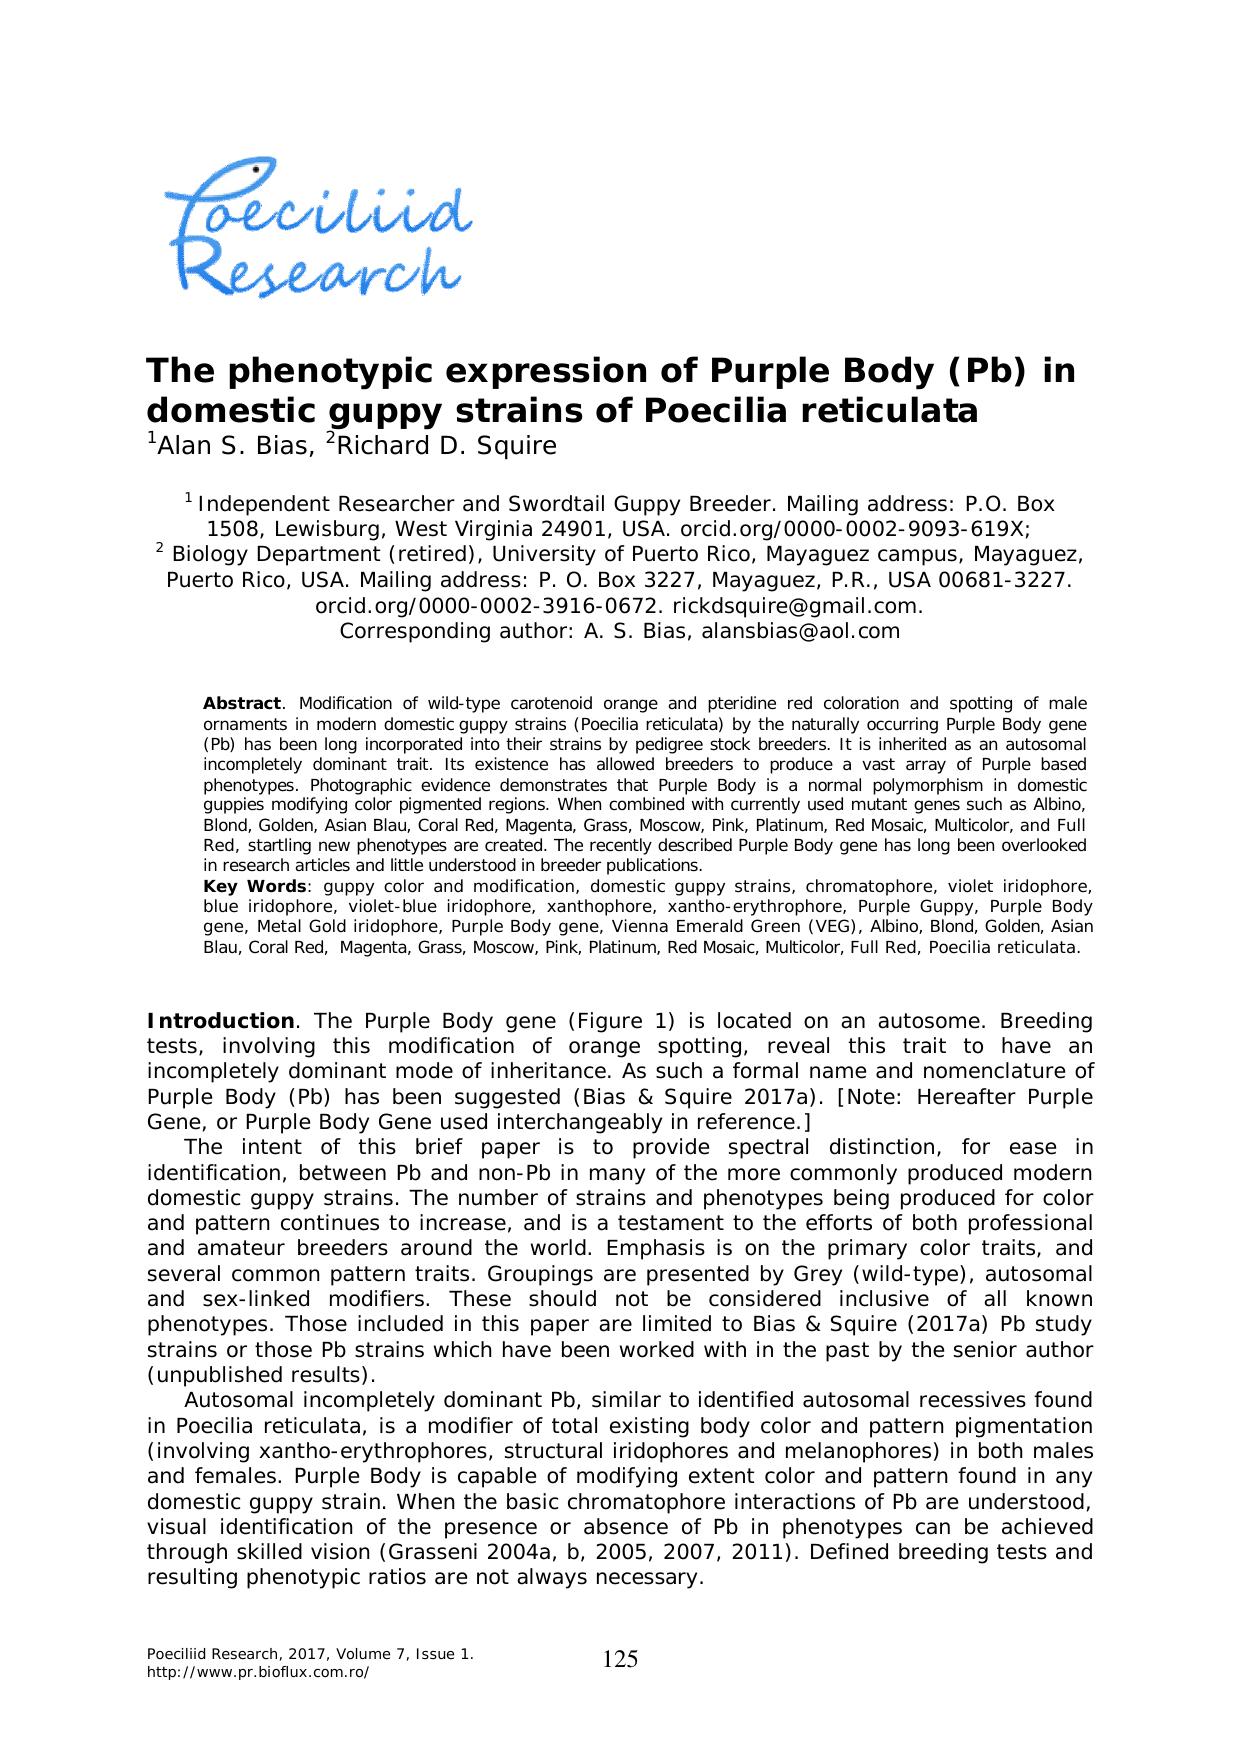 The phenotypic expression of Purple Body (Pb) in domestic guppy strains of Poecilia reticulata-AACL Bioflux   Aquacultu 2017